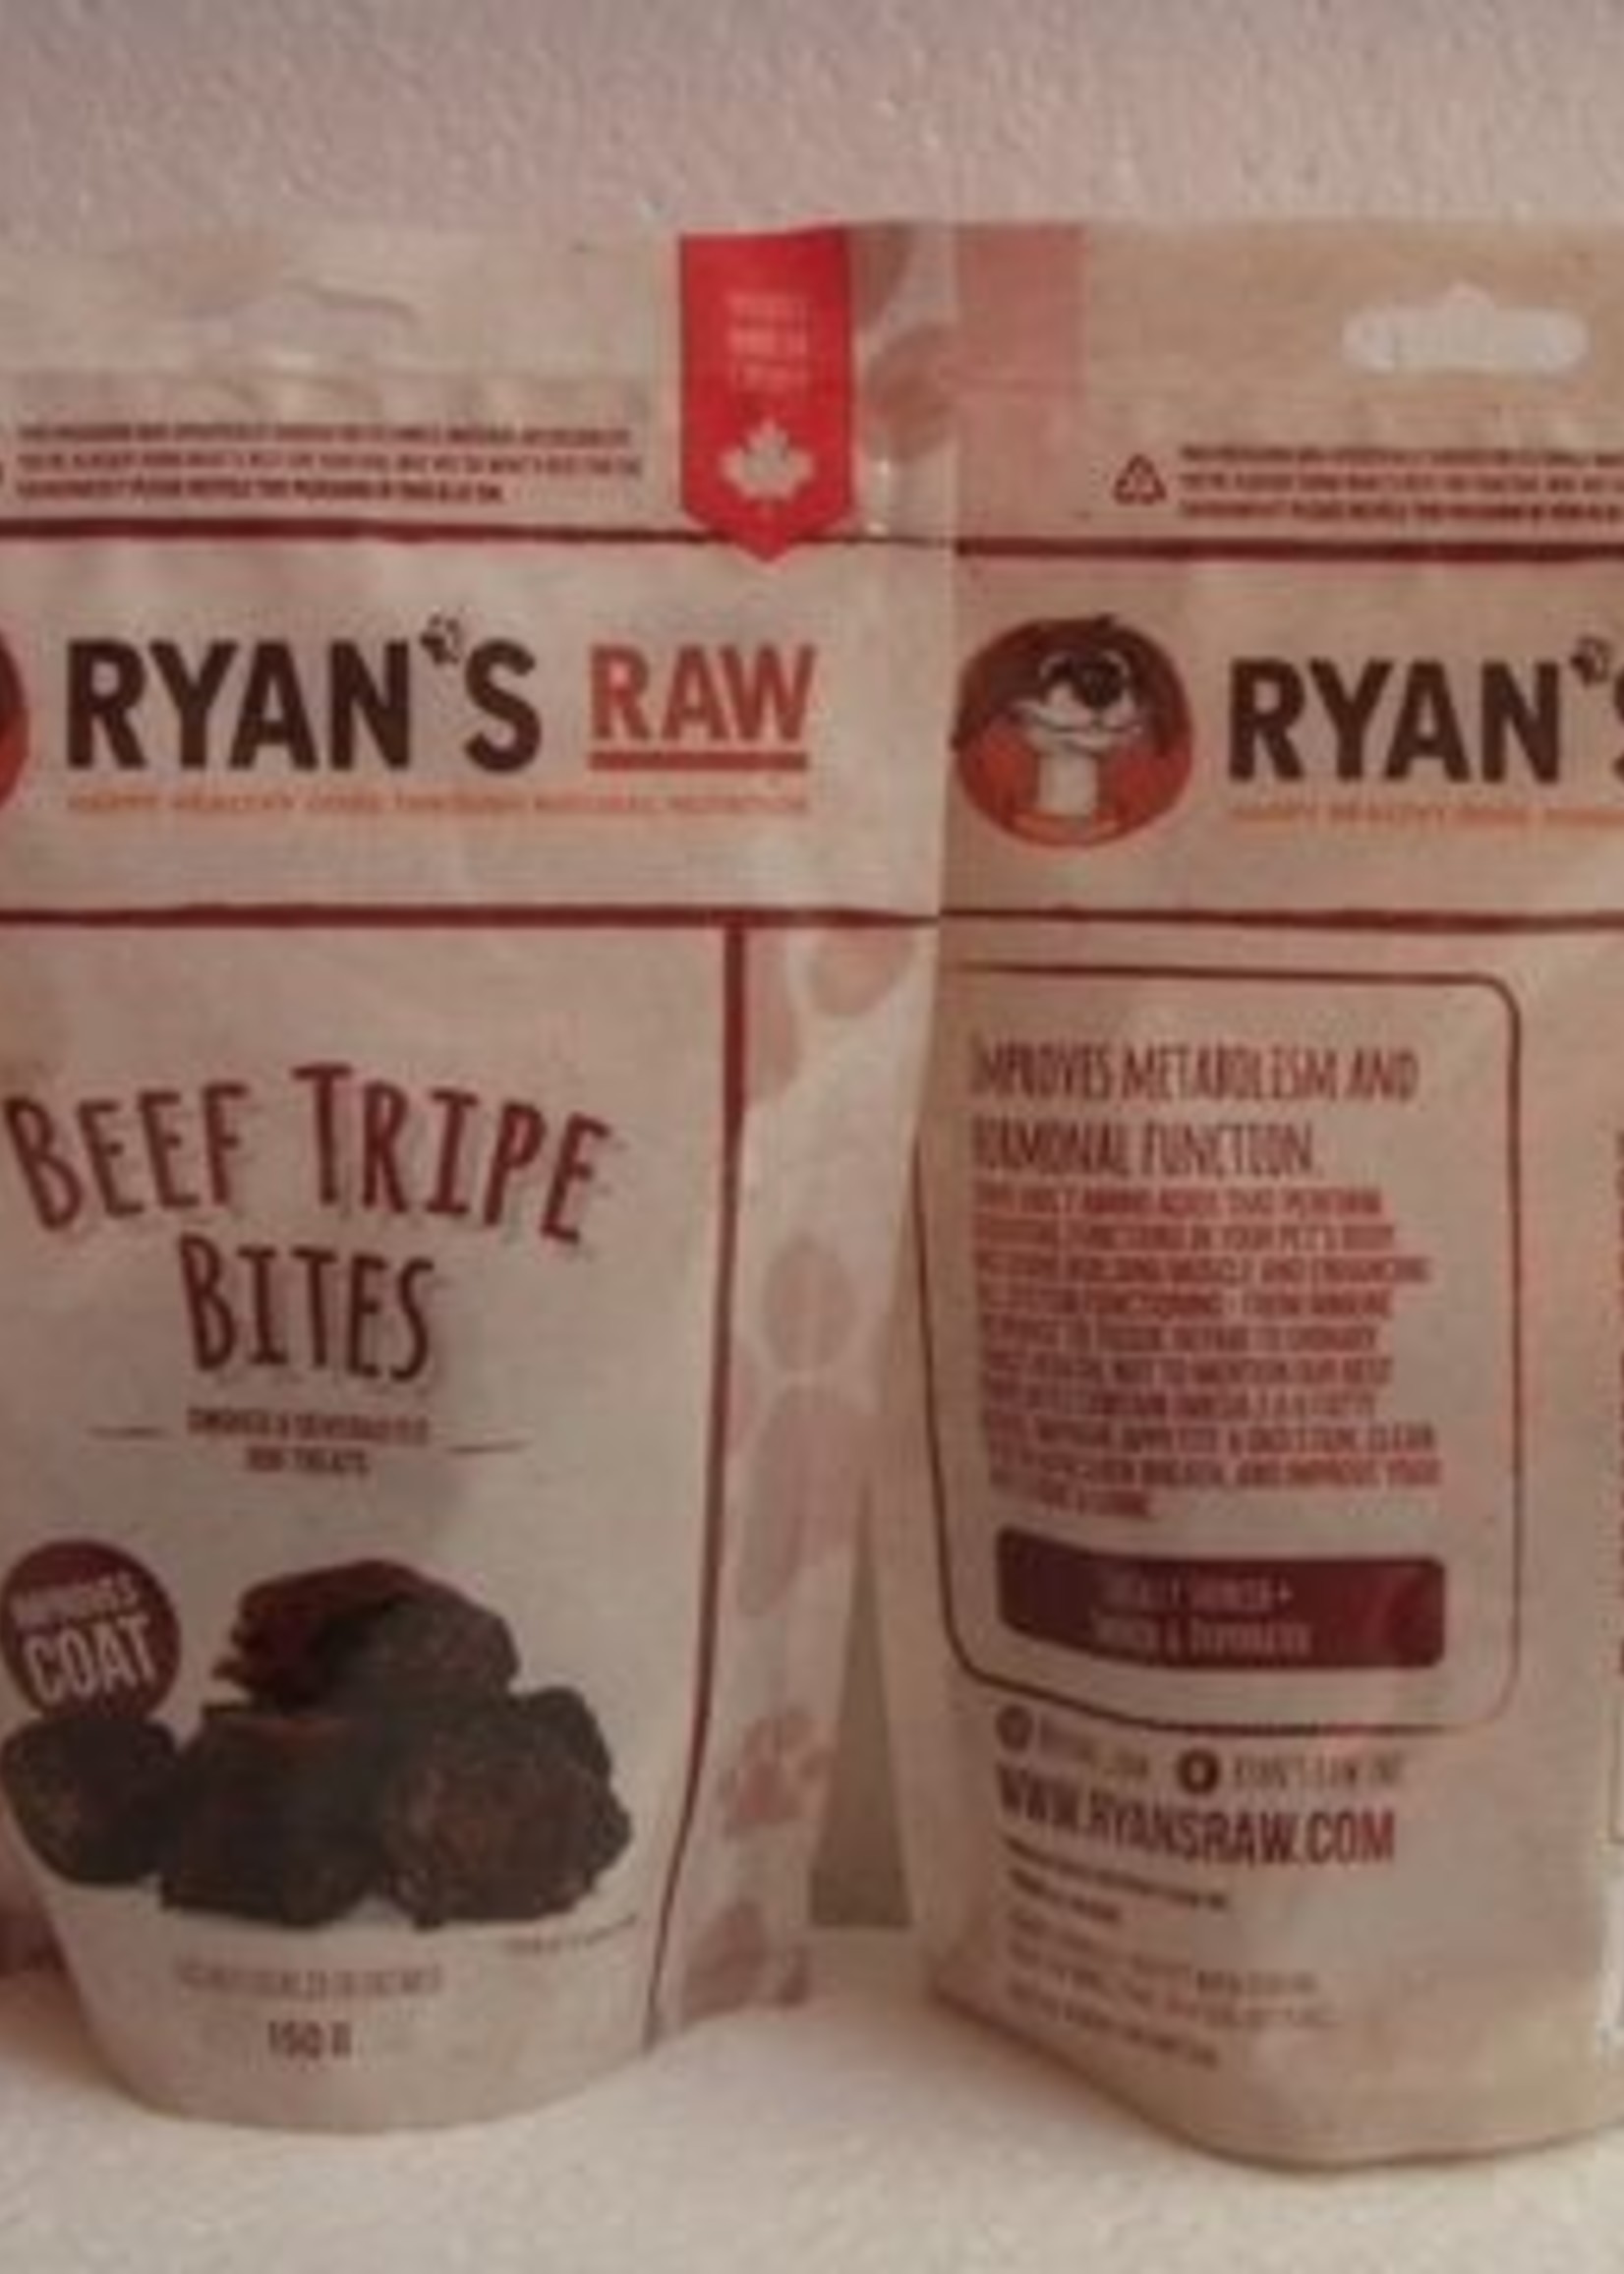 Ryan's Raw Beef Tripe Bites 100G